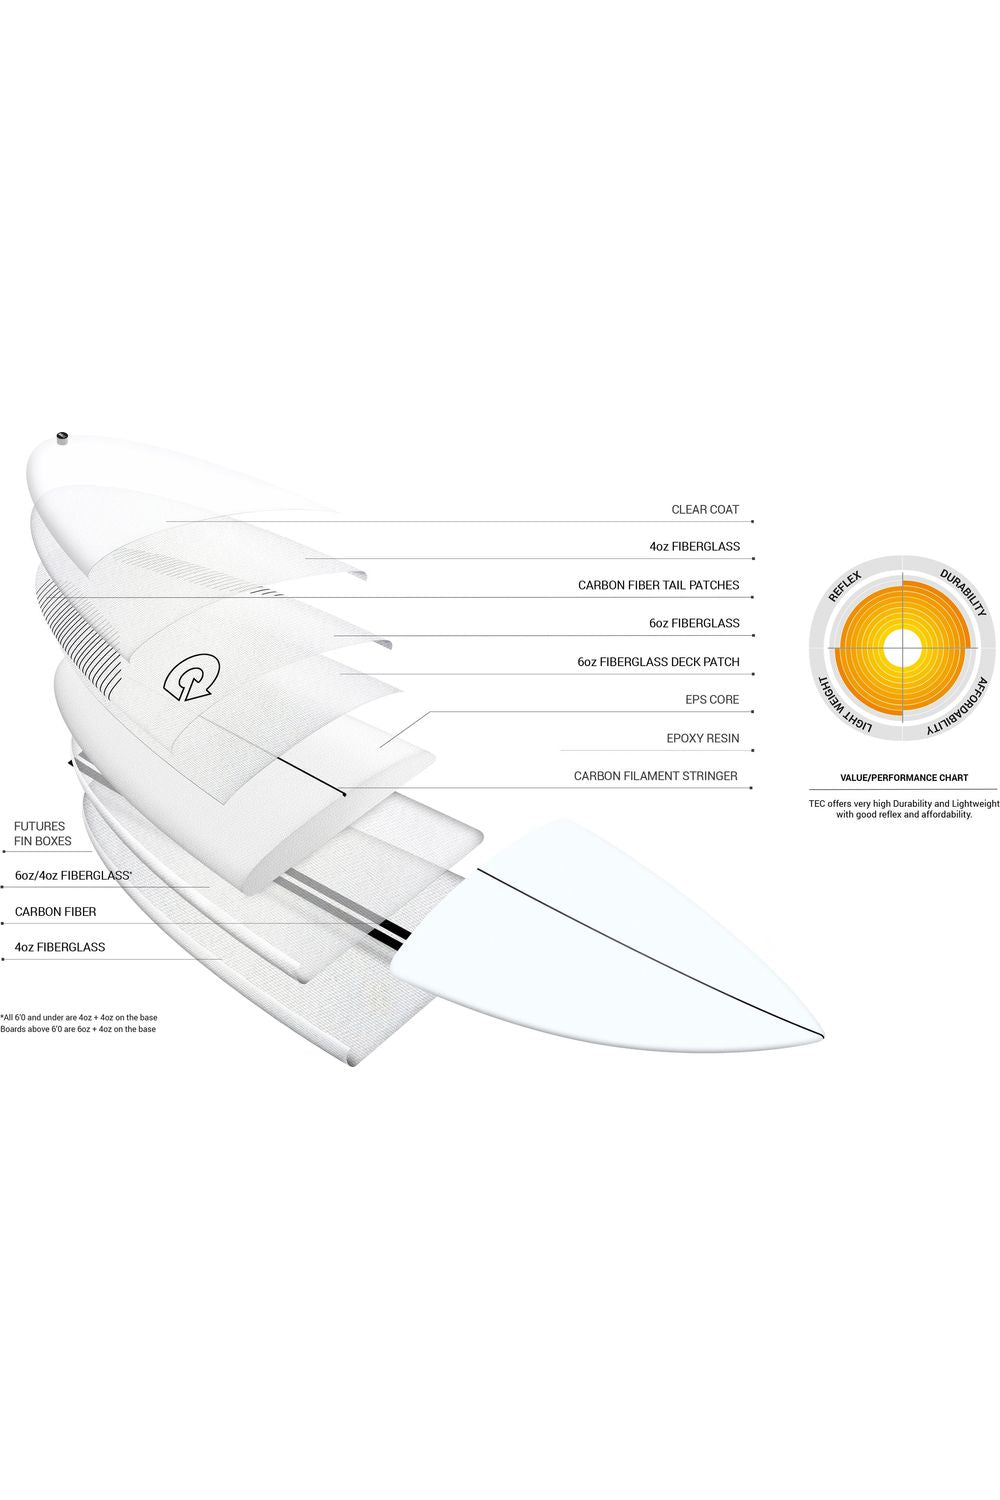 Torq TEC BigBoy23 Surfboard in White